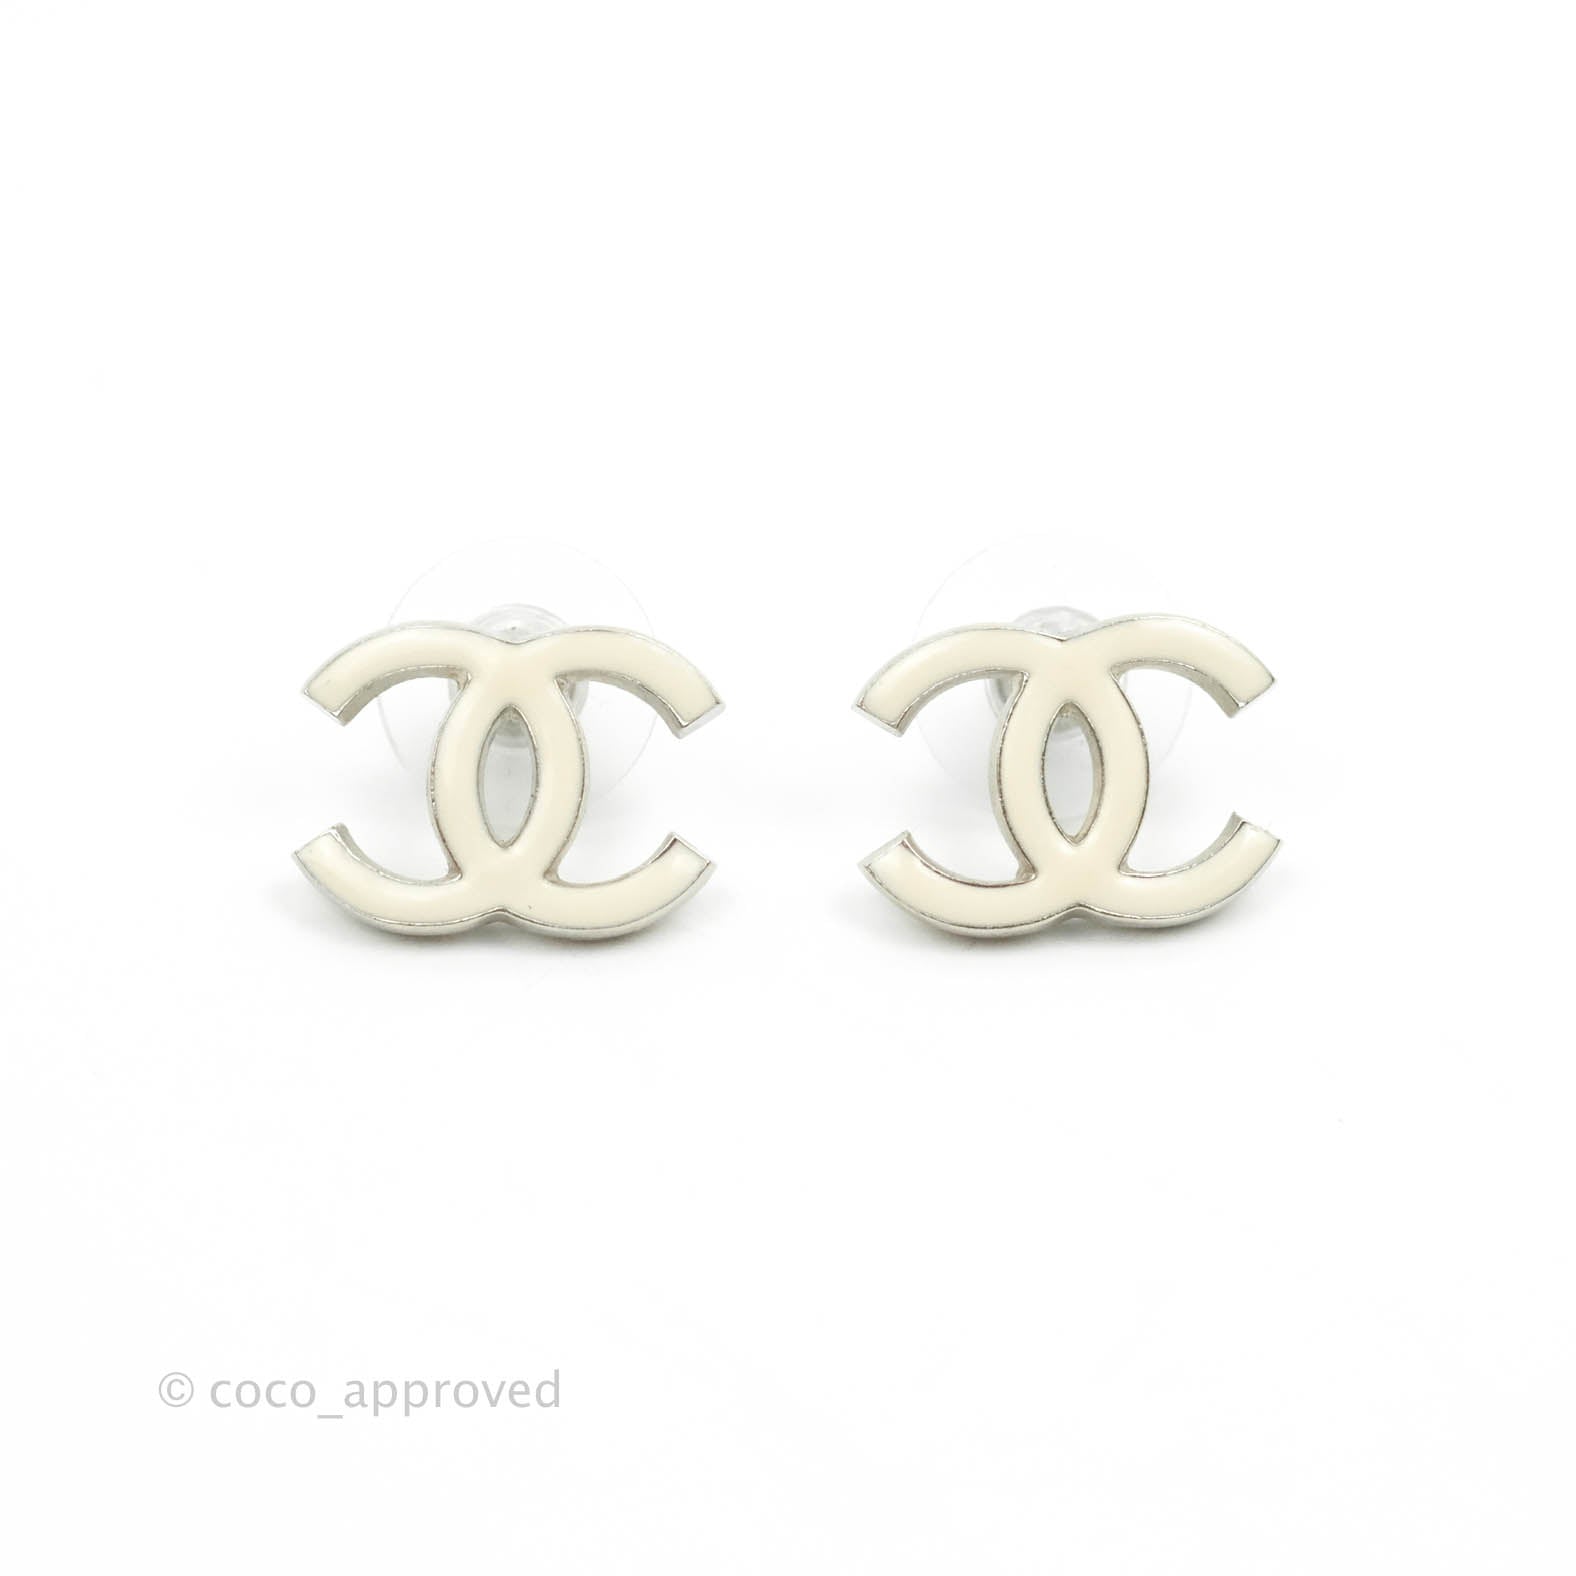 Vintage Chanel double C earrings white gold CC logo Authentic